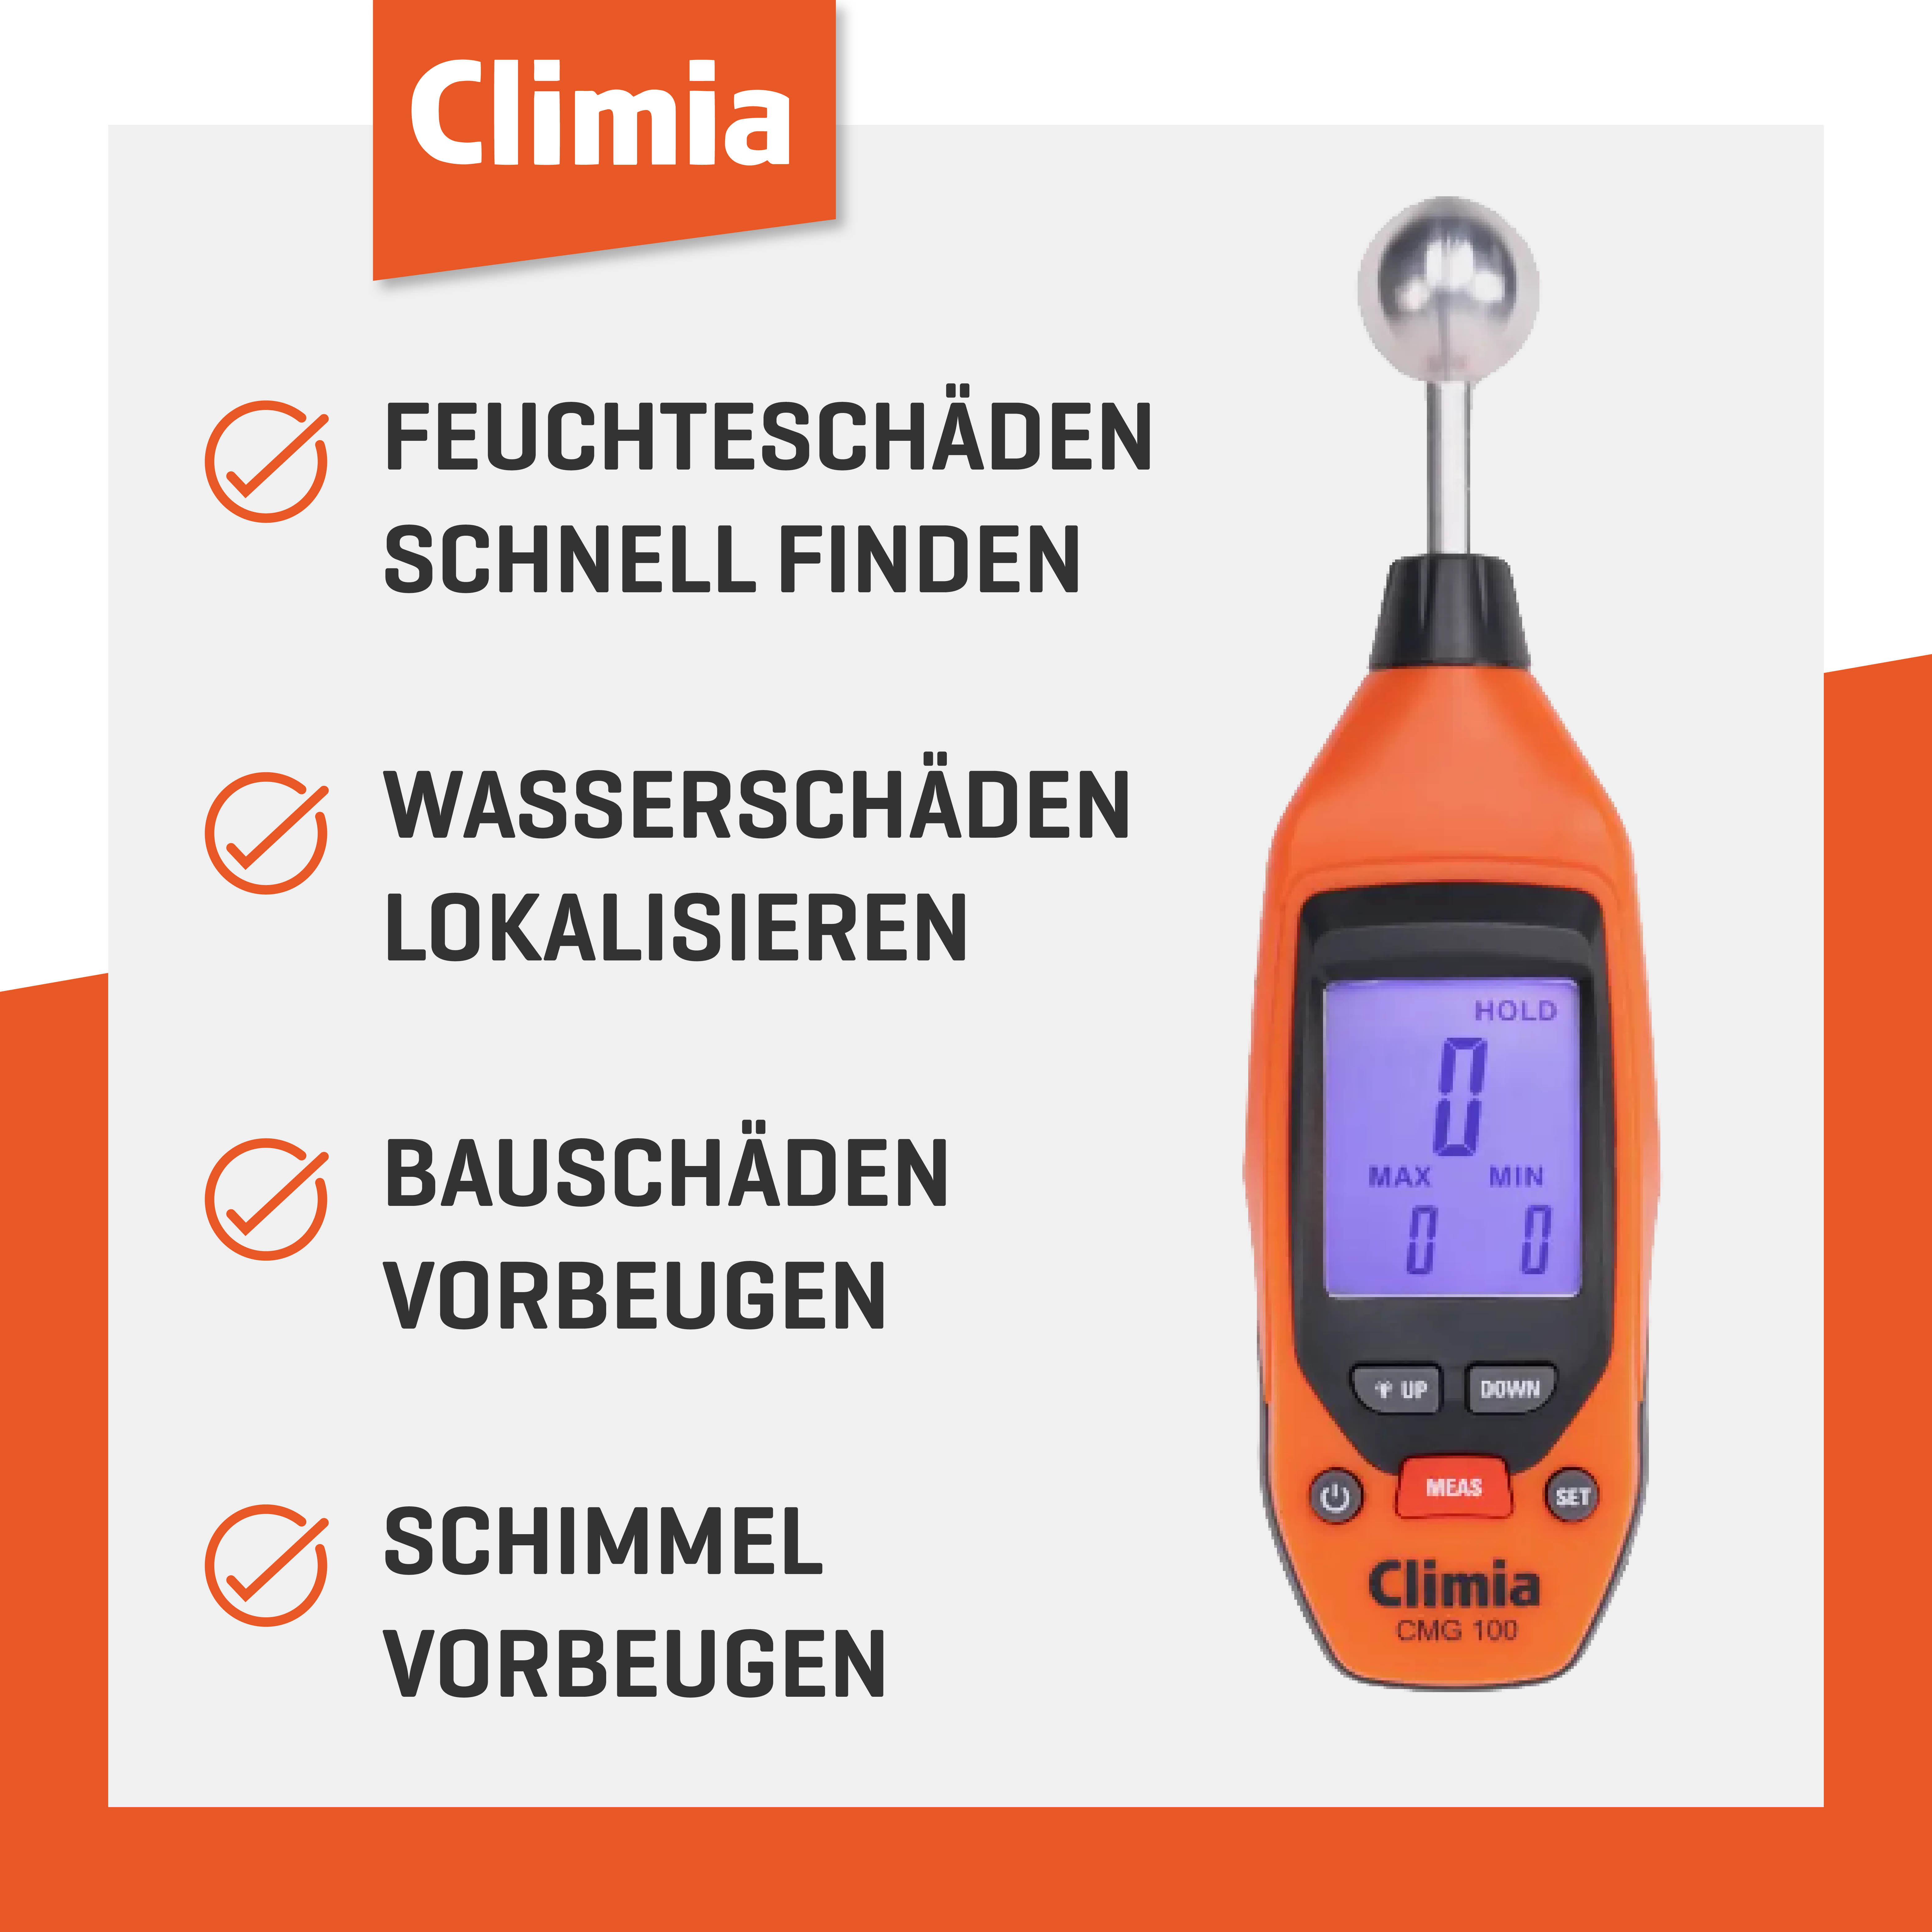 Climia CMG 100 Feuchtemessgerät Wände – Einfache Anwendung, beleuchtetes LED-Display bei langer Batterielaufzeit